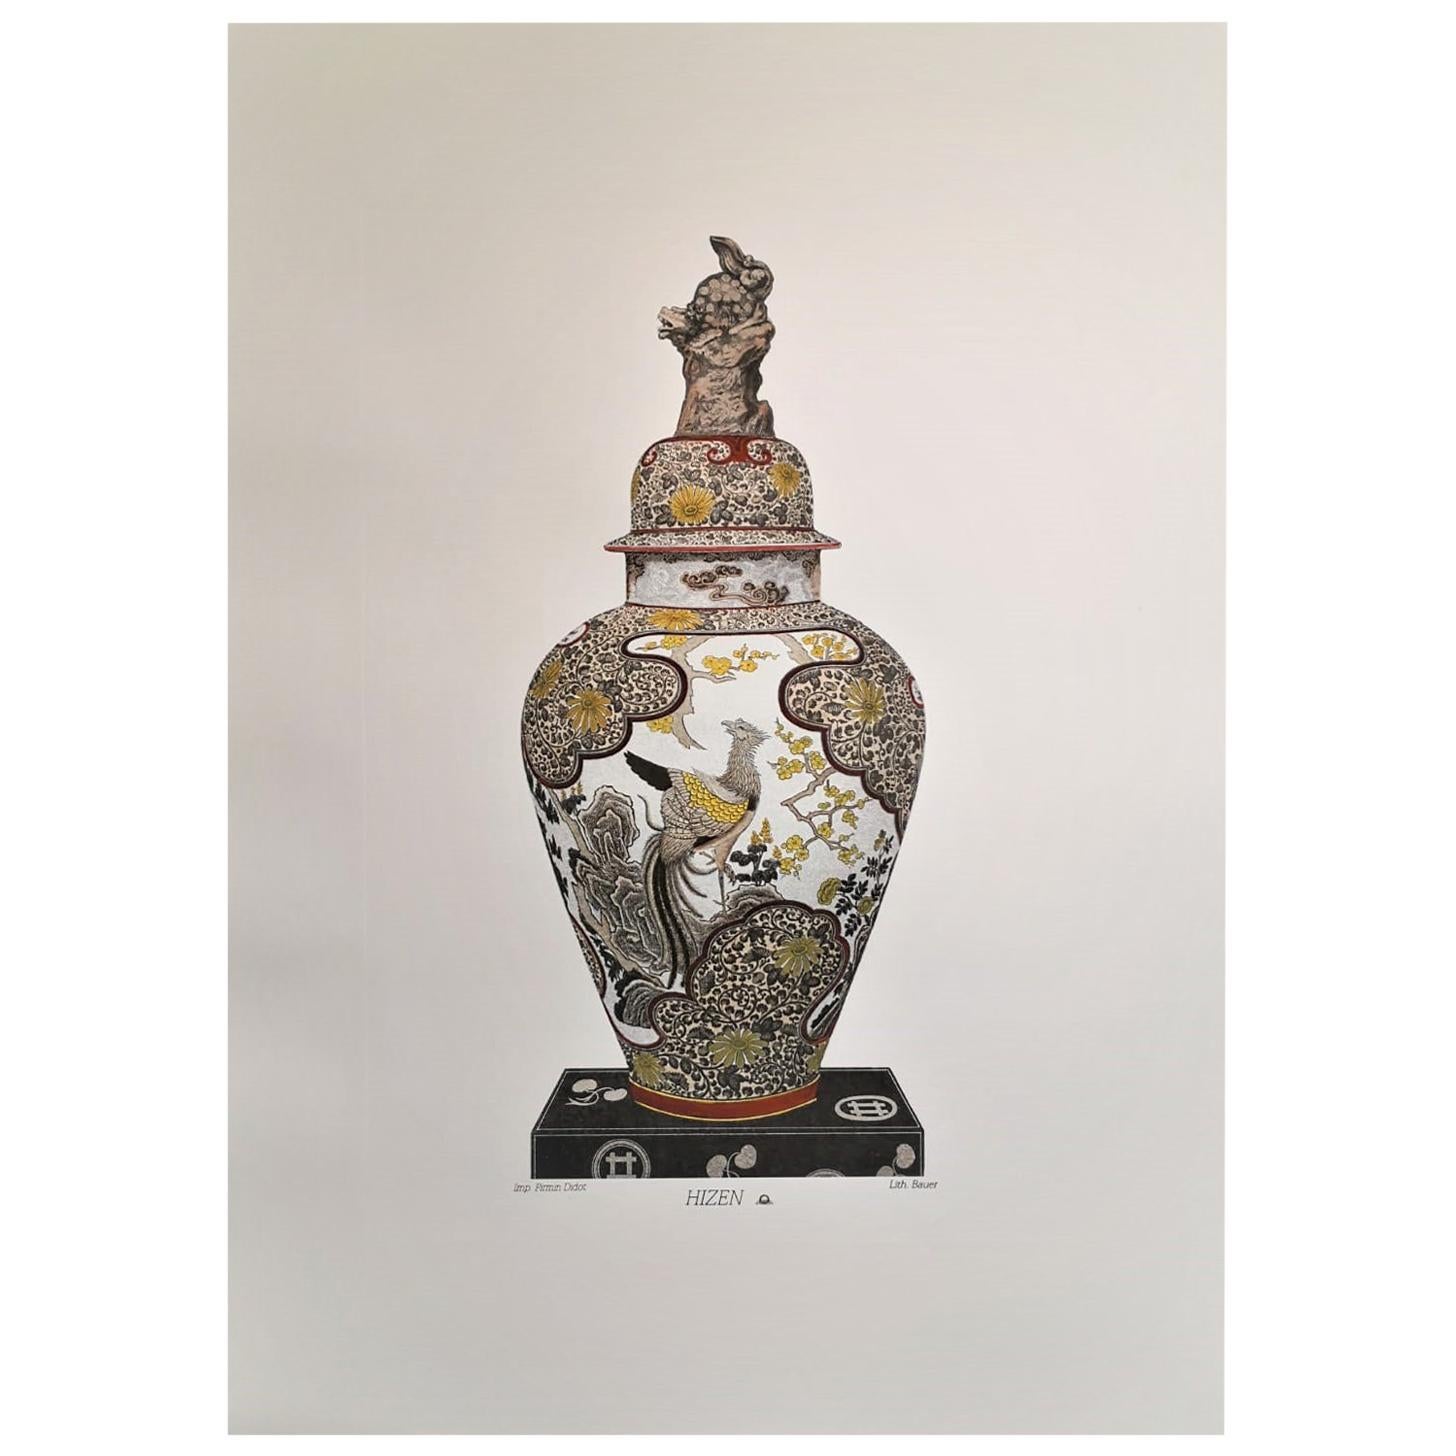 Italian Hand Painted Japanese "HIZEN" Vase Print